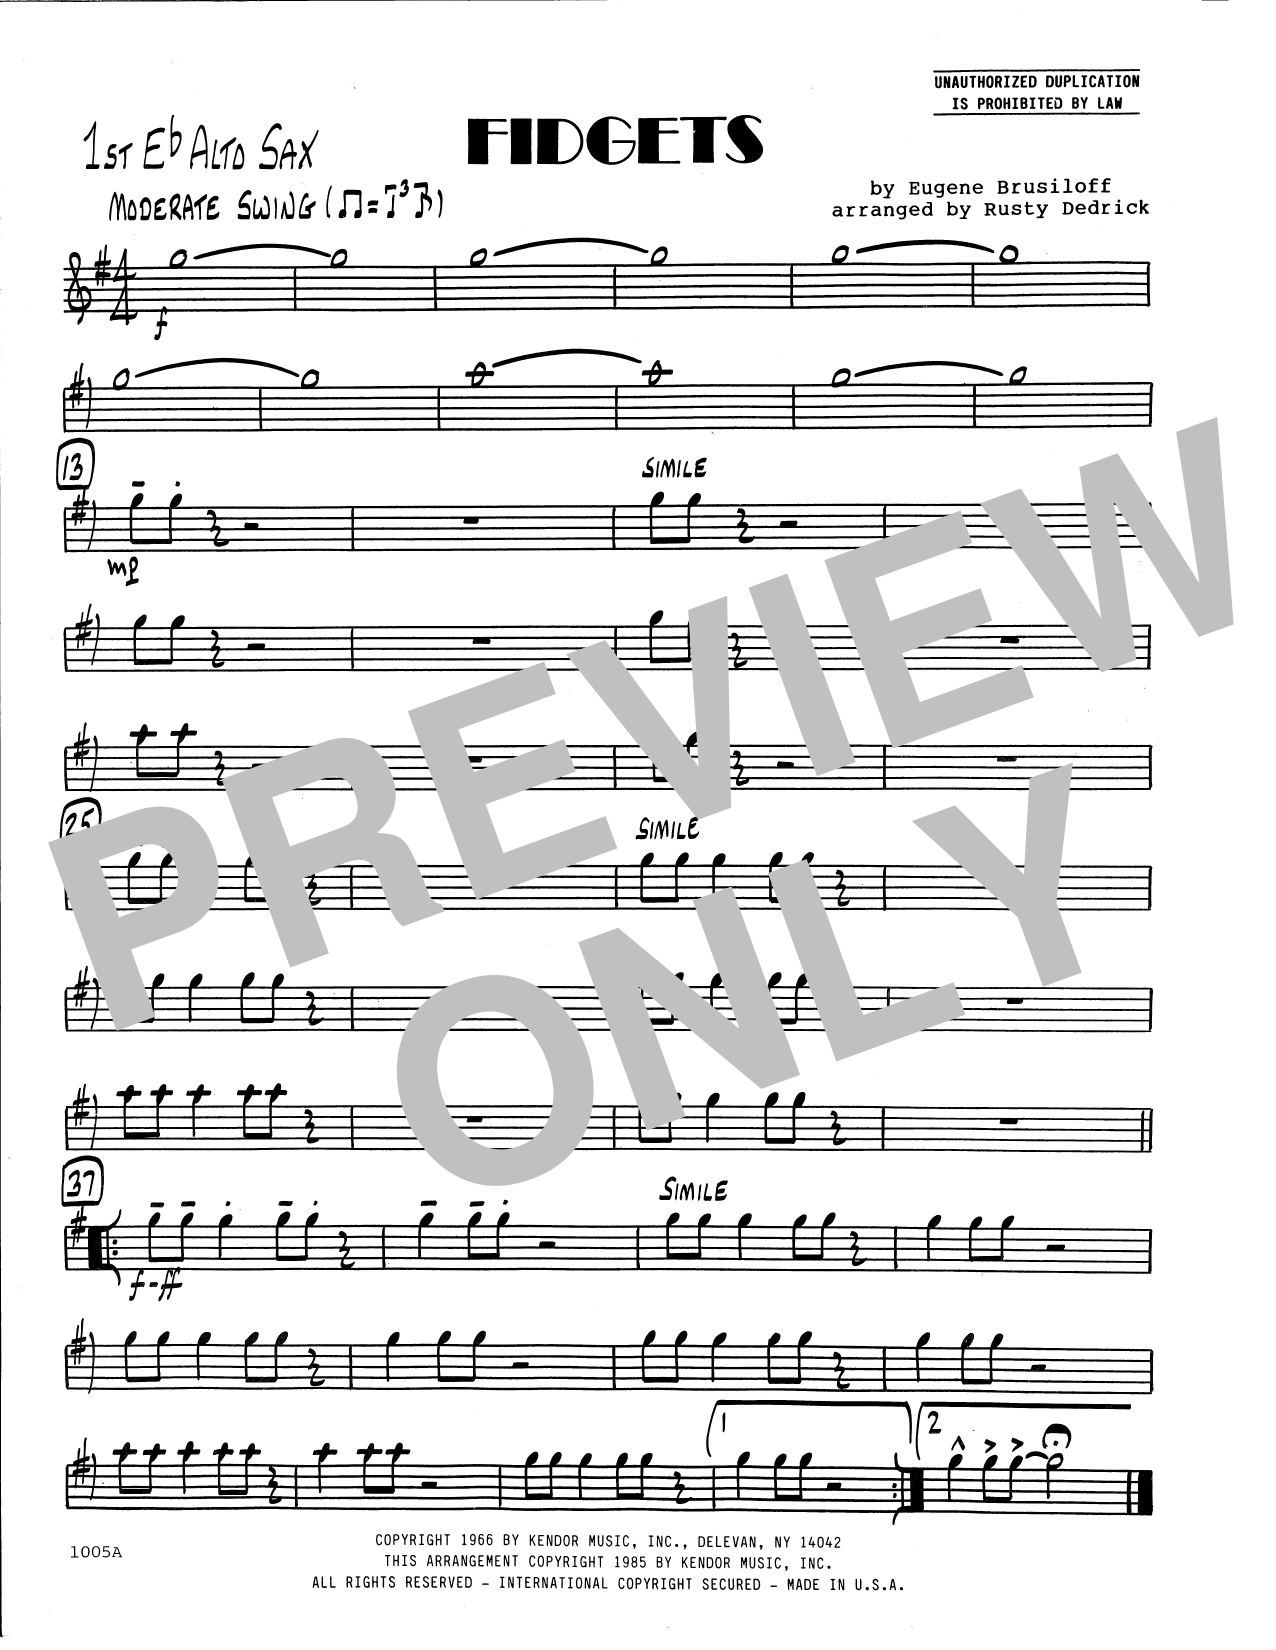 Download Eugene Brusiloff Fidgets (arr. Rusty Dedrick) - 1st Eb A Sheet Music